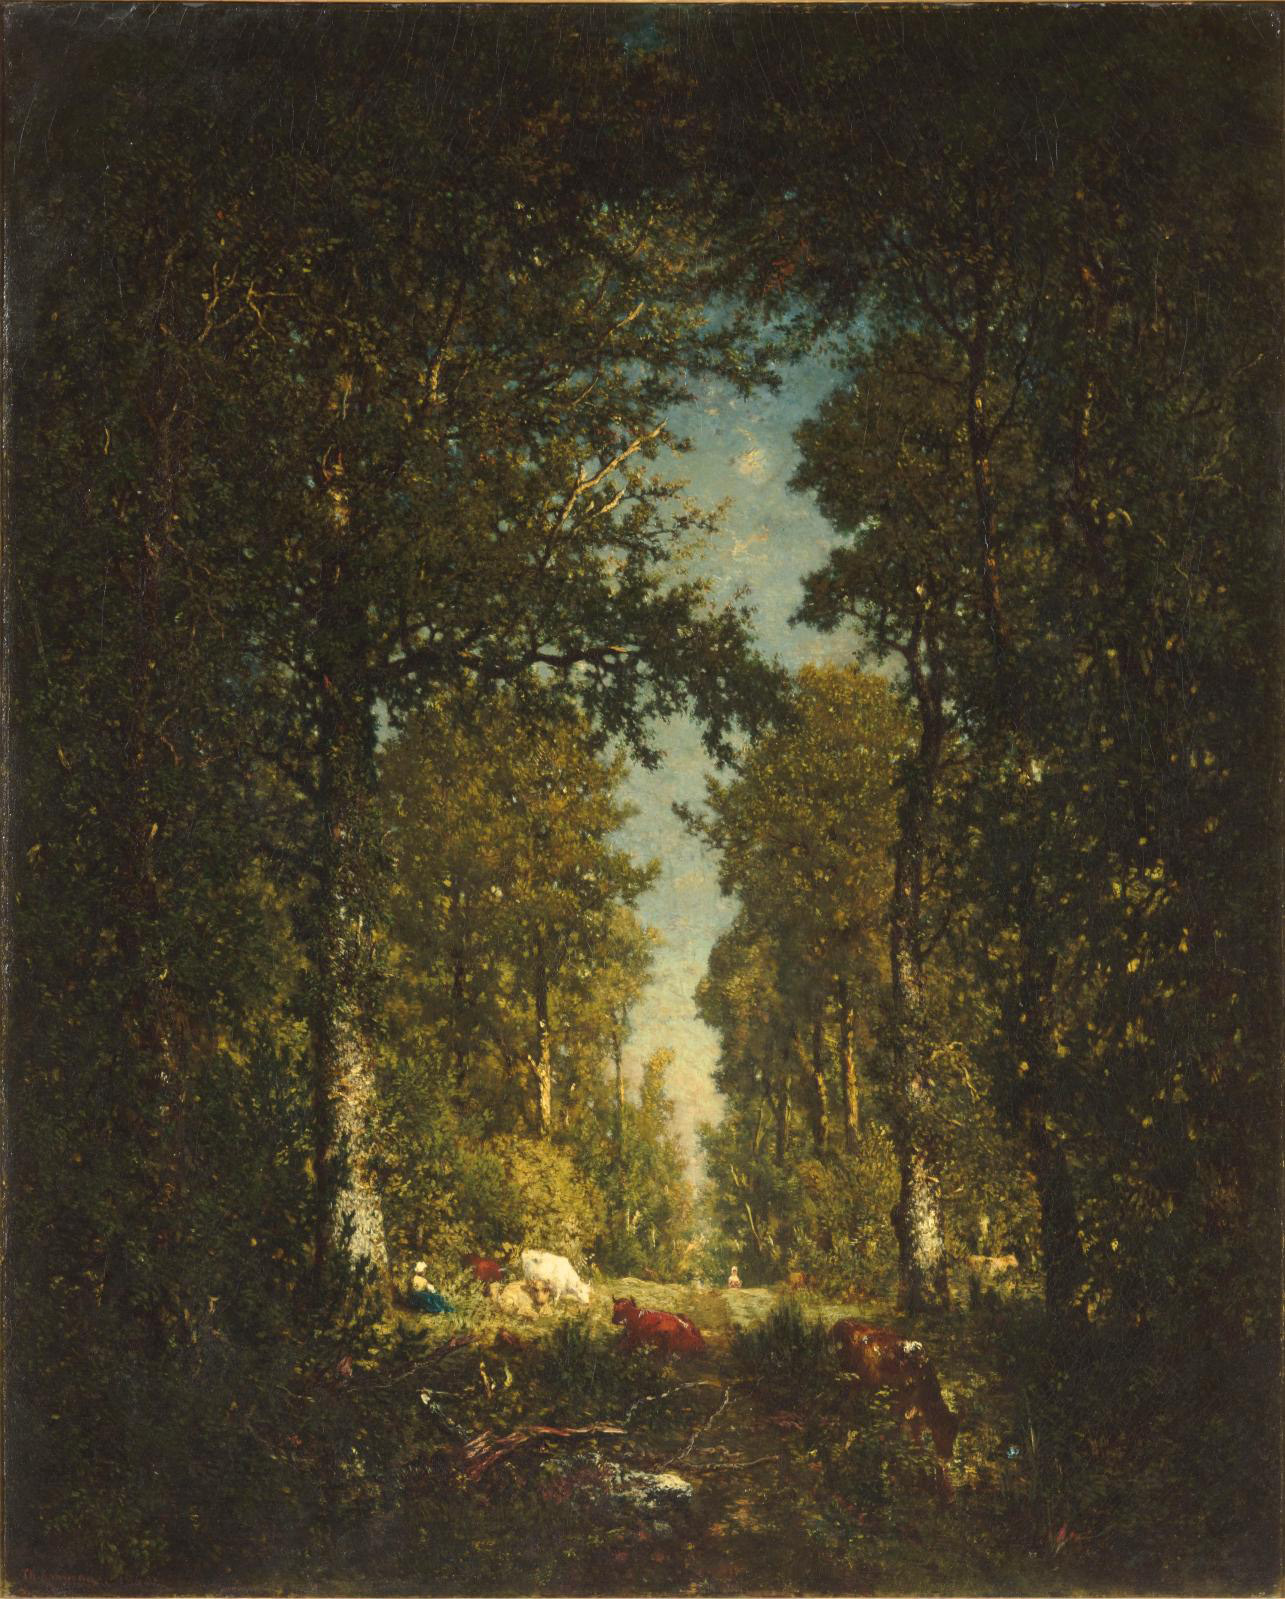 The First Ecologist Painter: Théodore Rousseau, a Retrospective at the Petit Palais